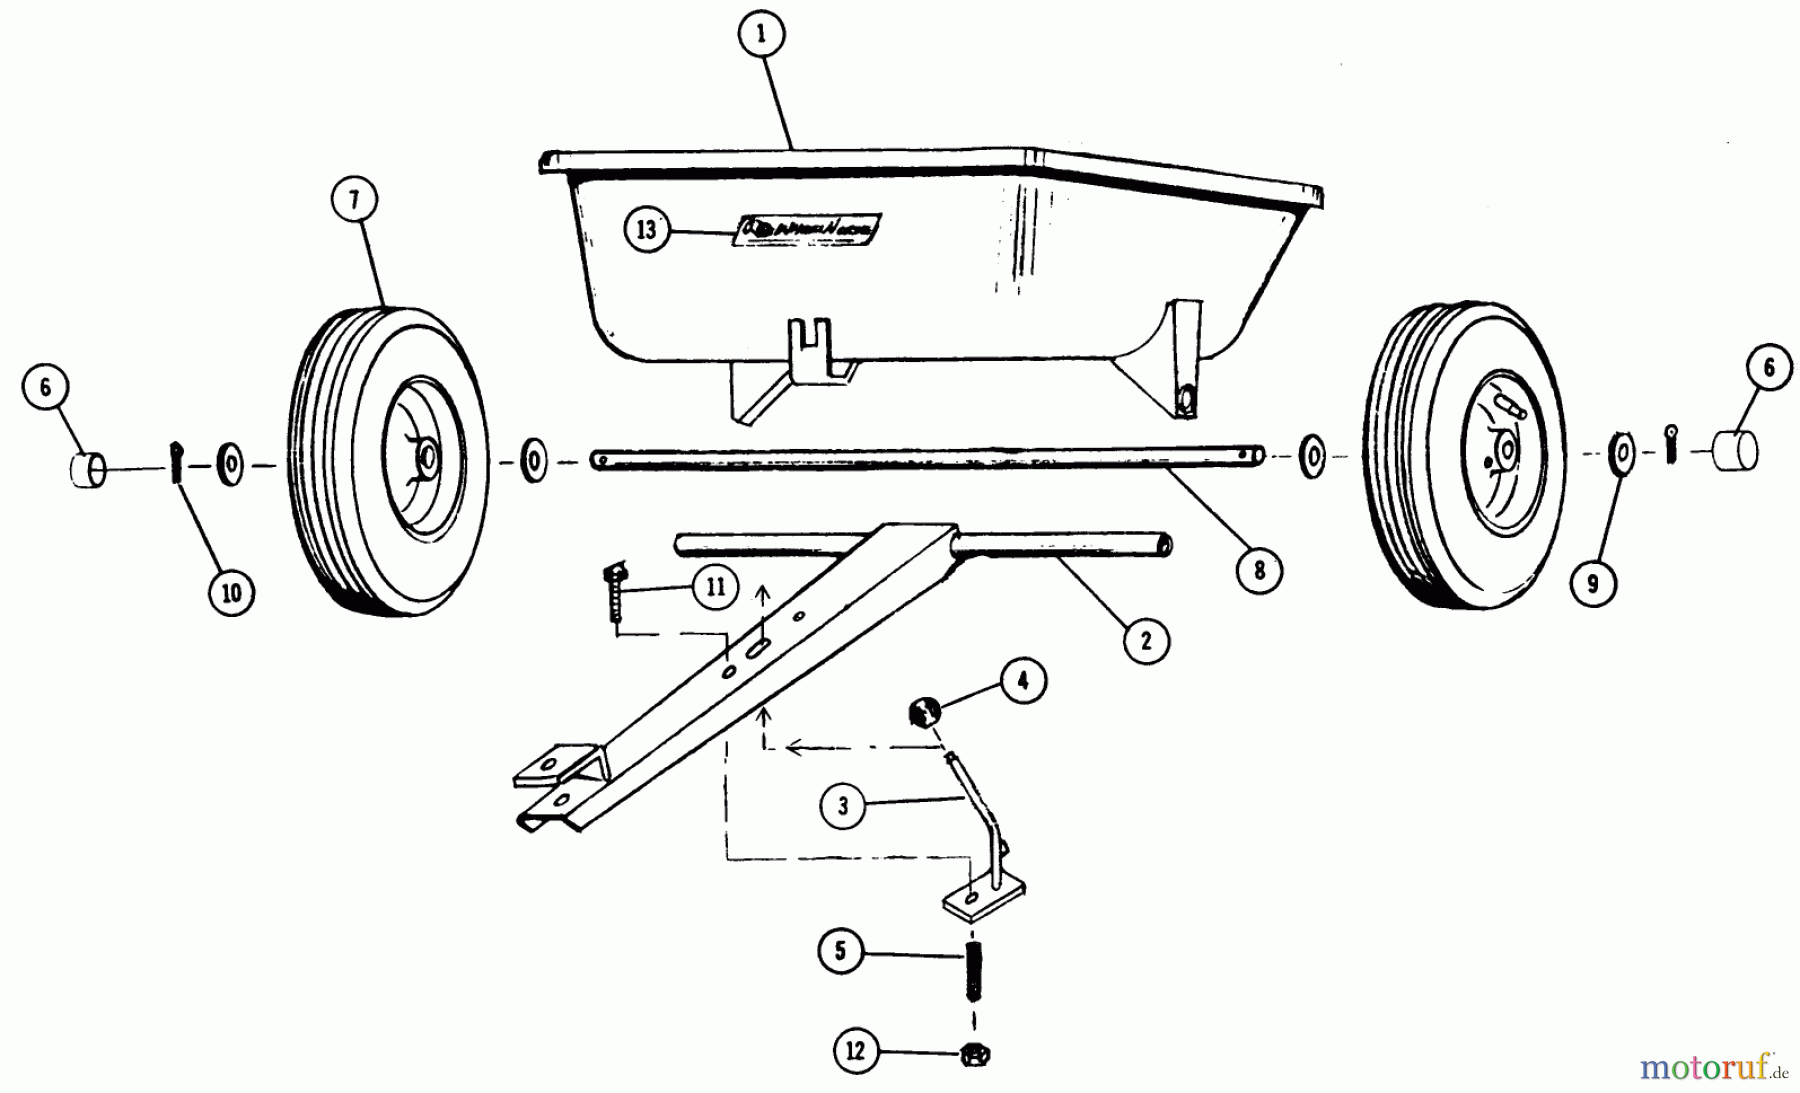  Toro Neu Utility Carts 7-2211 - Toro 2-Wheel Cart, 1973 PARTS LIST-DUMP TRAILER MODEL 7-2211 (FORMERLY LTD-244)